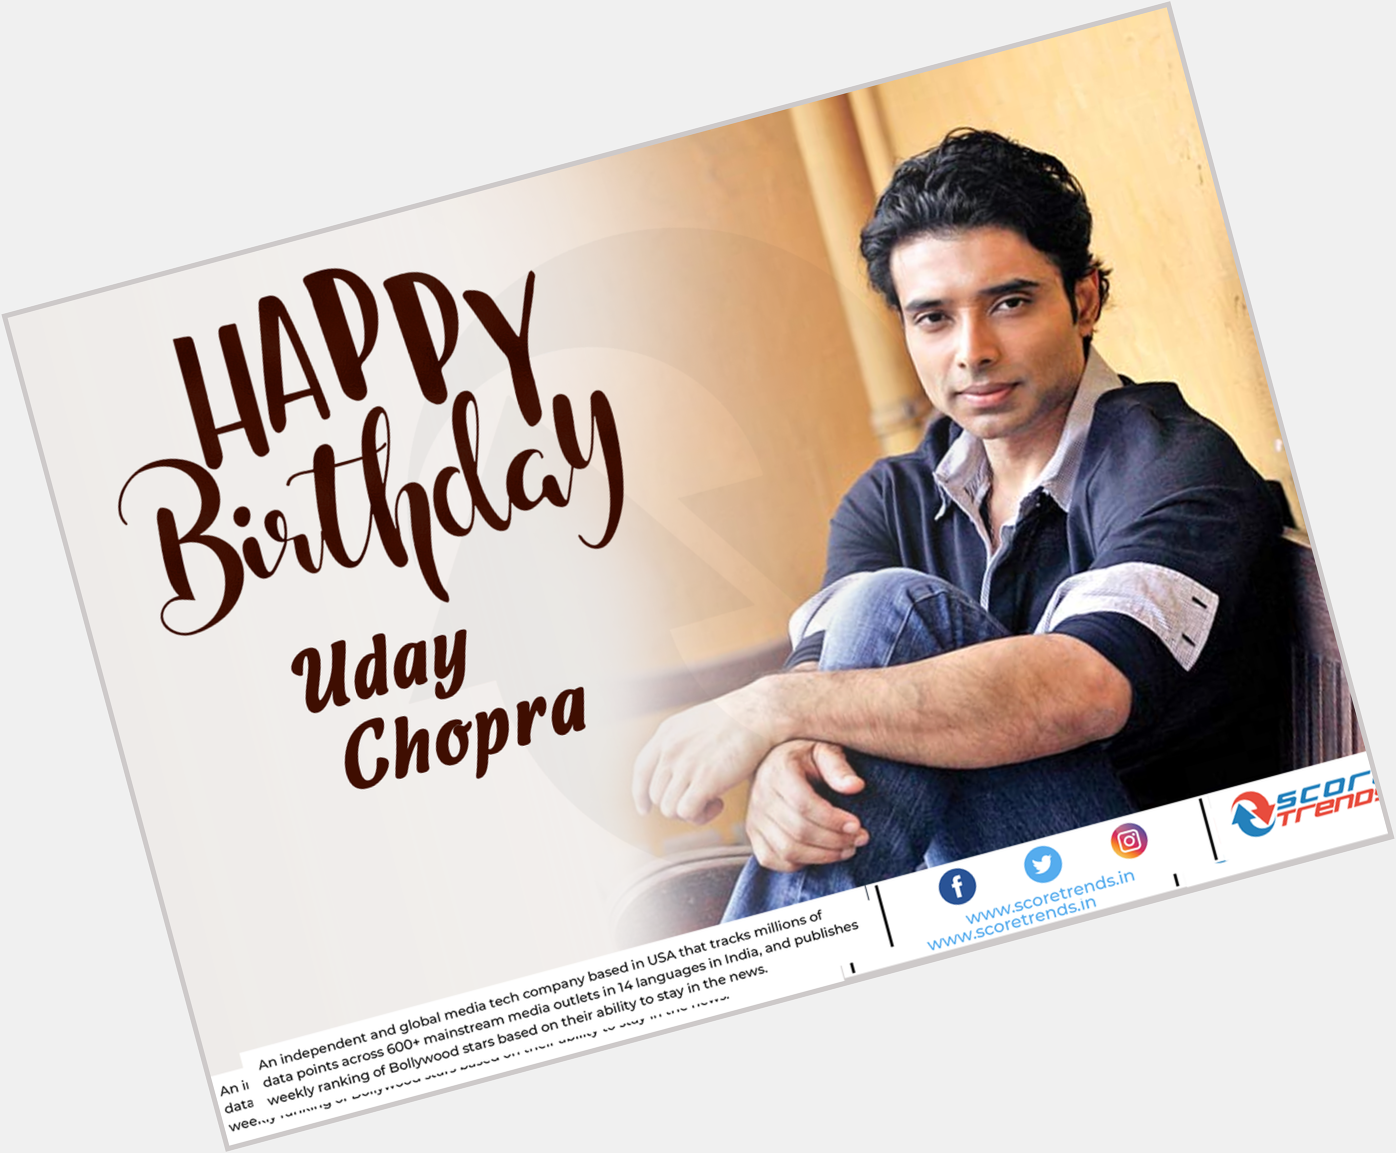 Score Trends wishes Uday Chopra a Happy Birthday!!     